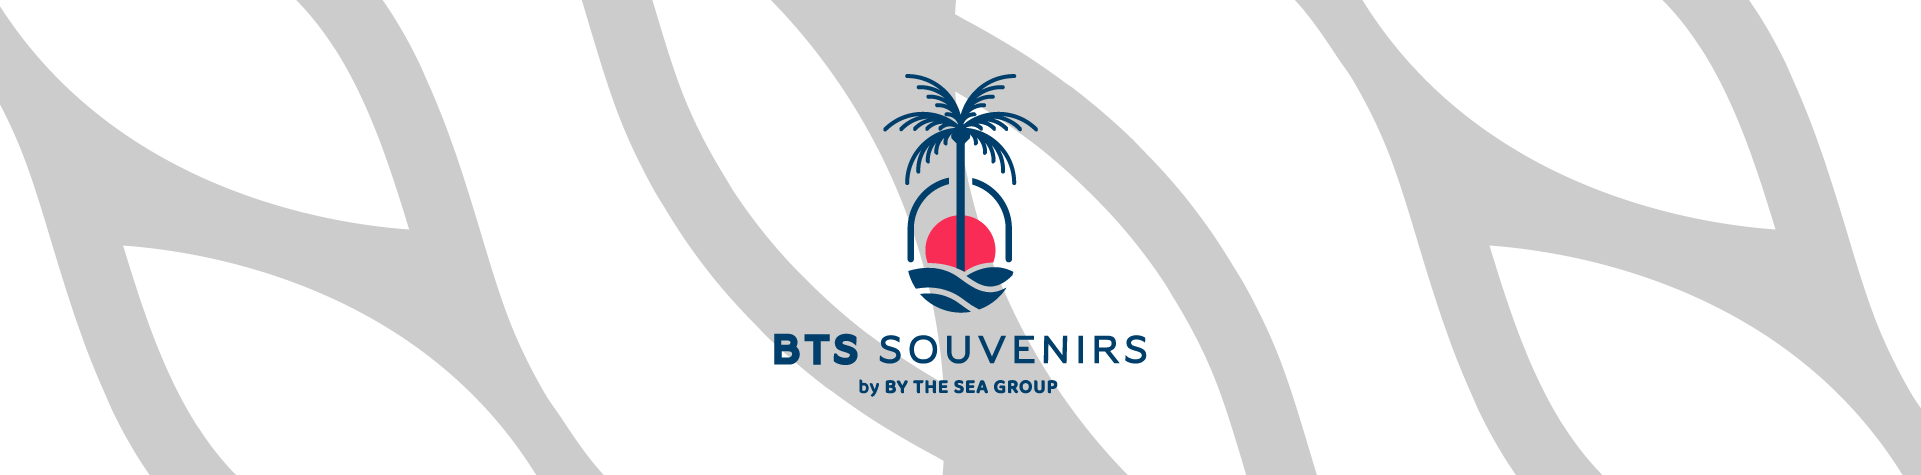 By The Sea BTS Souvenirs